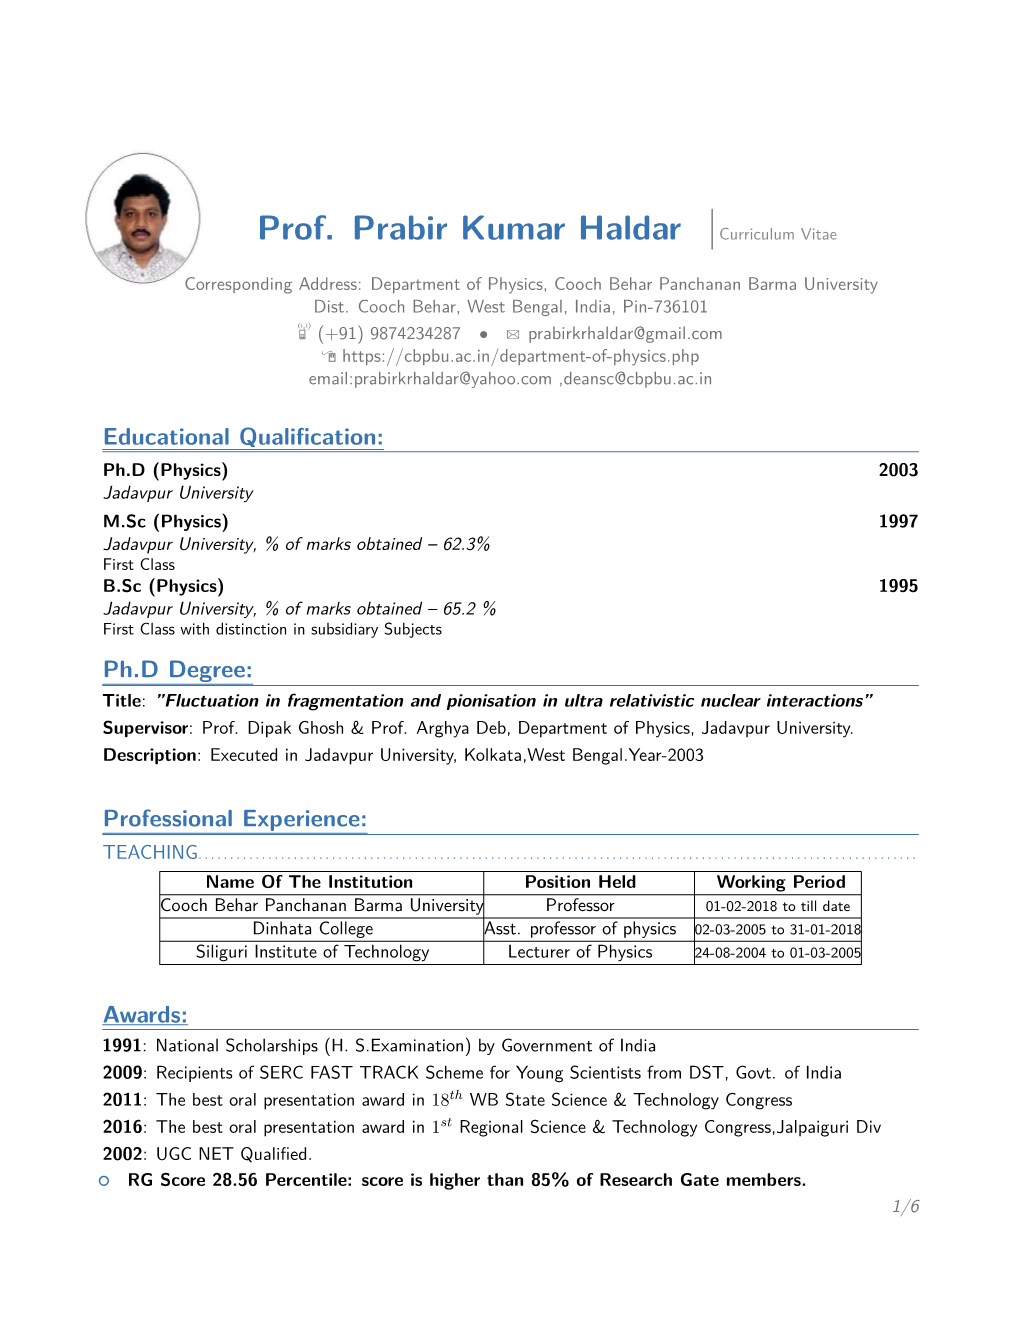 Prof. Prabir Kumar Haldar – Curriculum Vitae